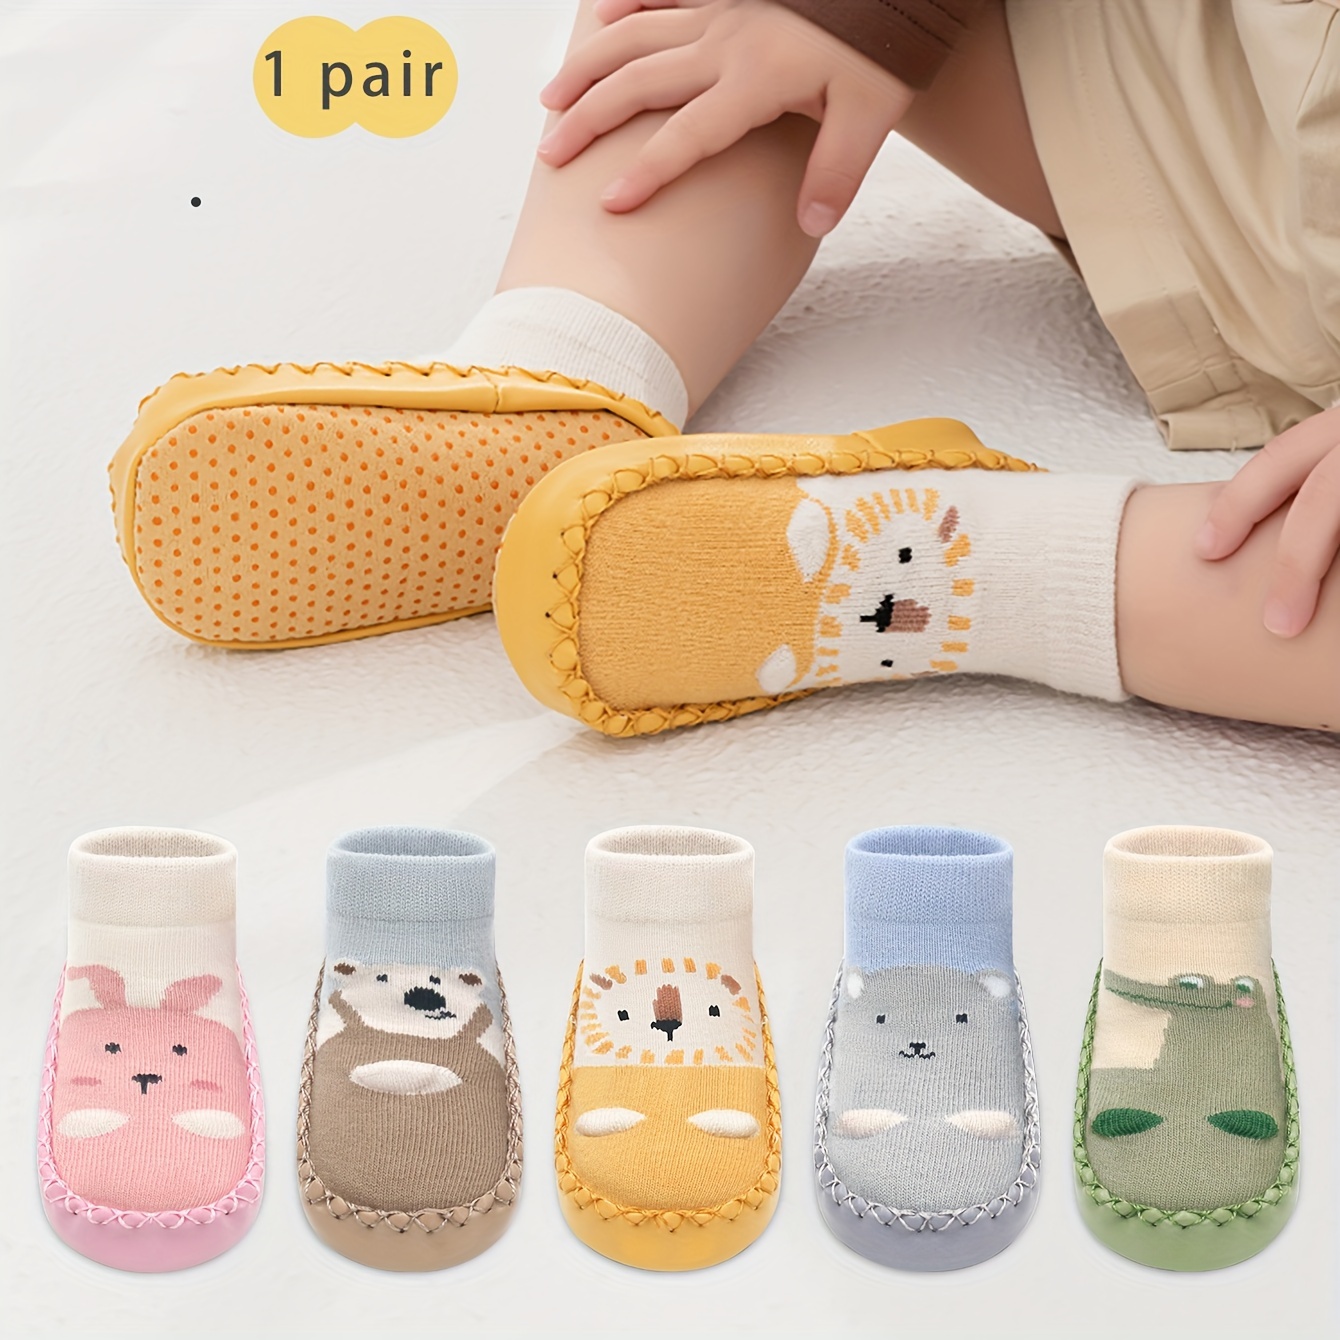 

1 Pair Of Toddler's Novelty Cute Cartoon Floor Sock Shoes, Cotton Anti-skid Bottom Sock Shoes, Boys Girls Kids Socks For All Seasons Wearing